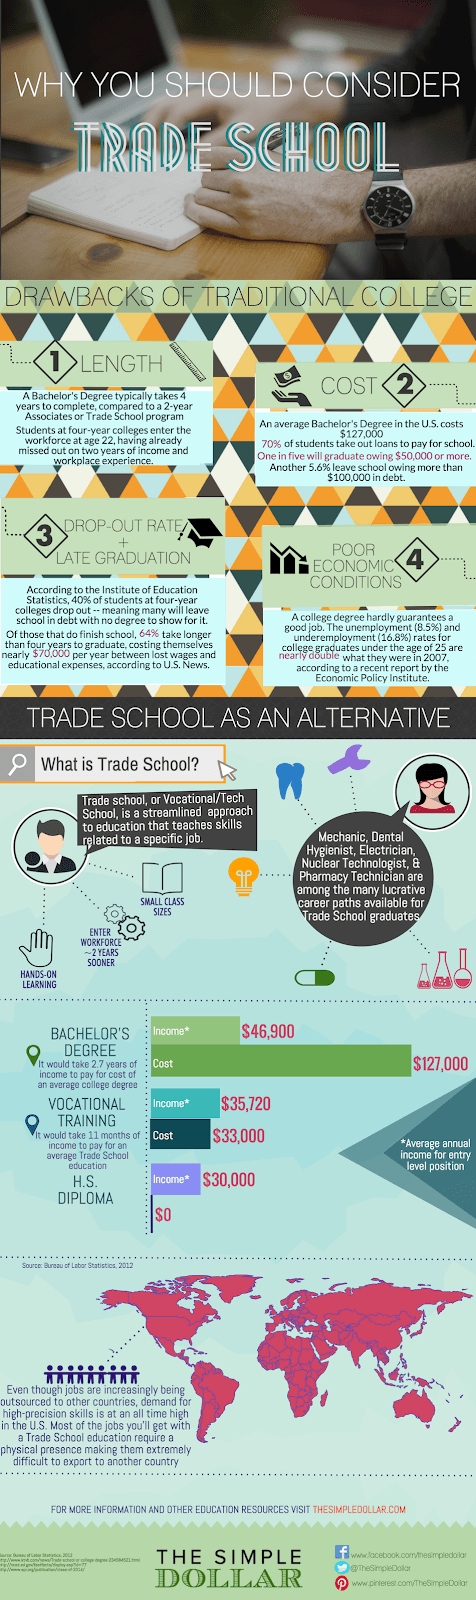 Trade School Infographic